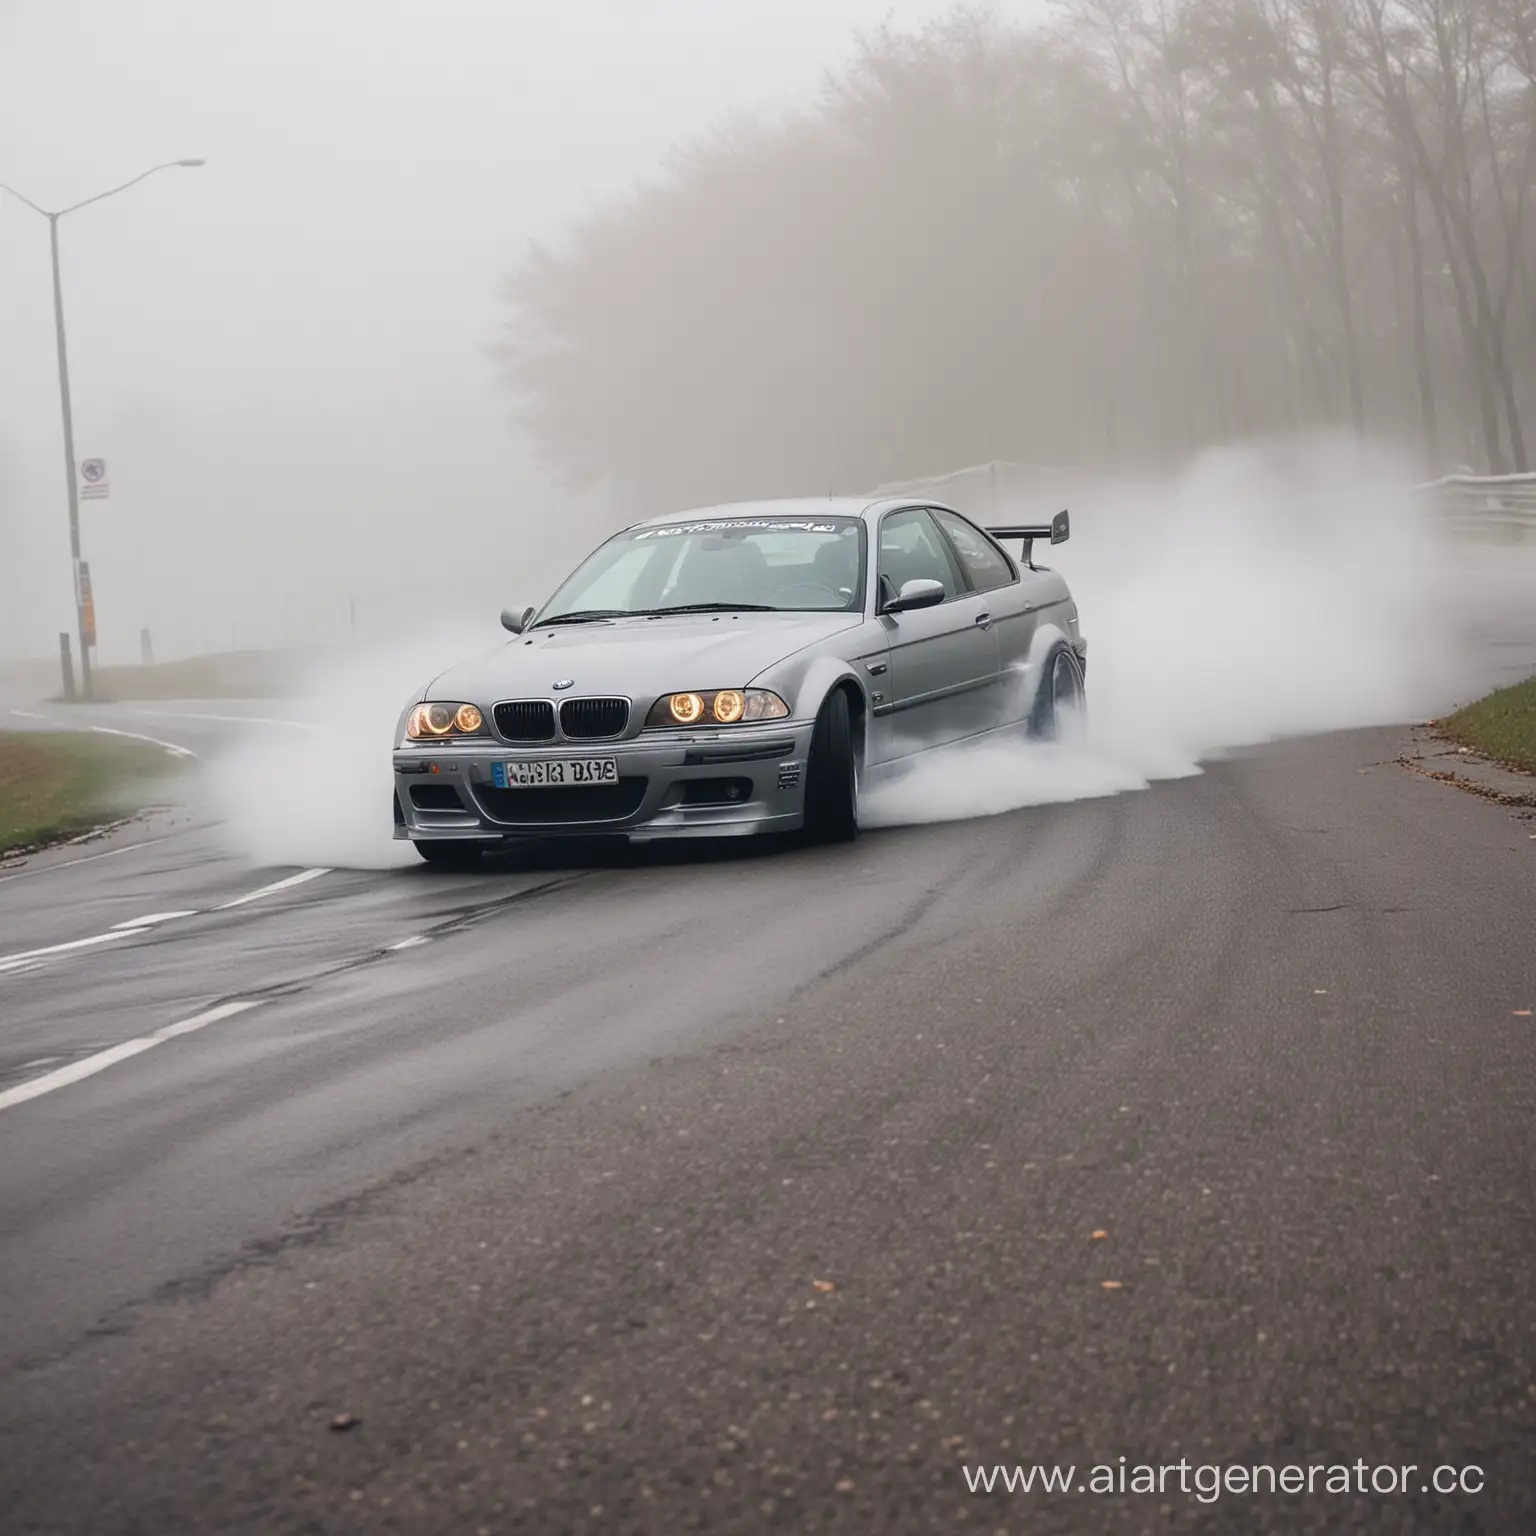 BMW e46 drifting around a corner in a fog
Make it drift more 